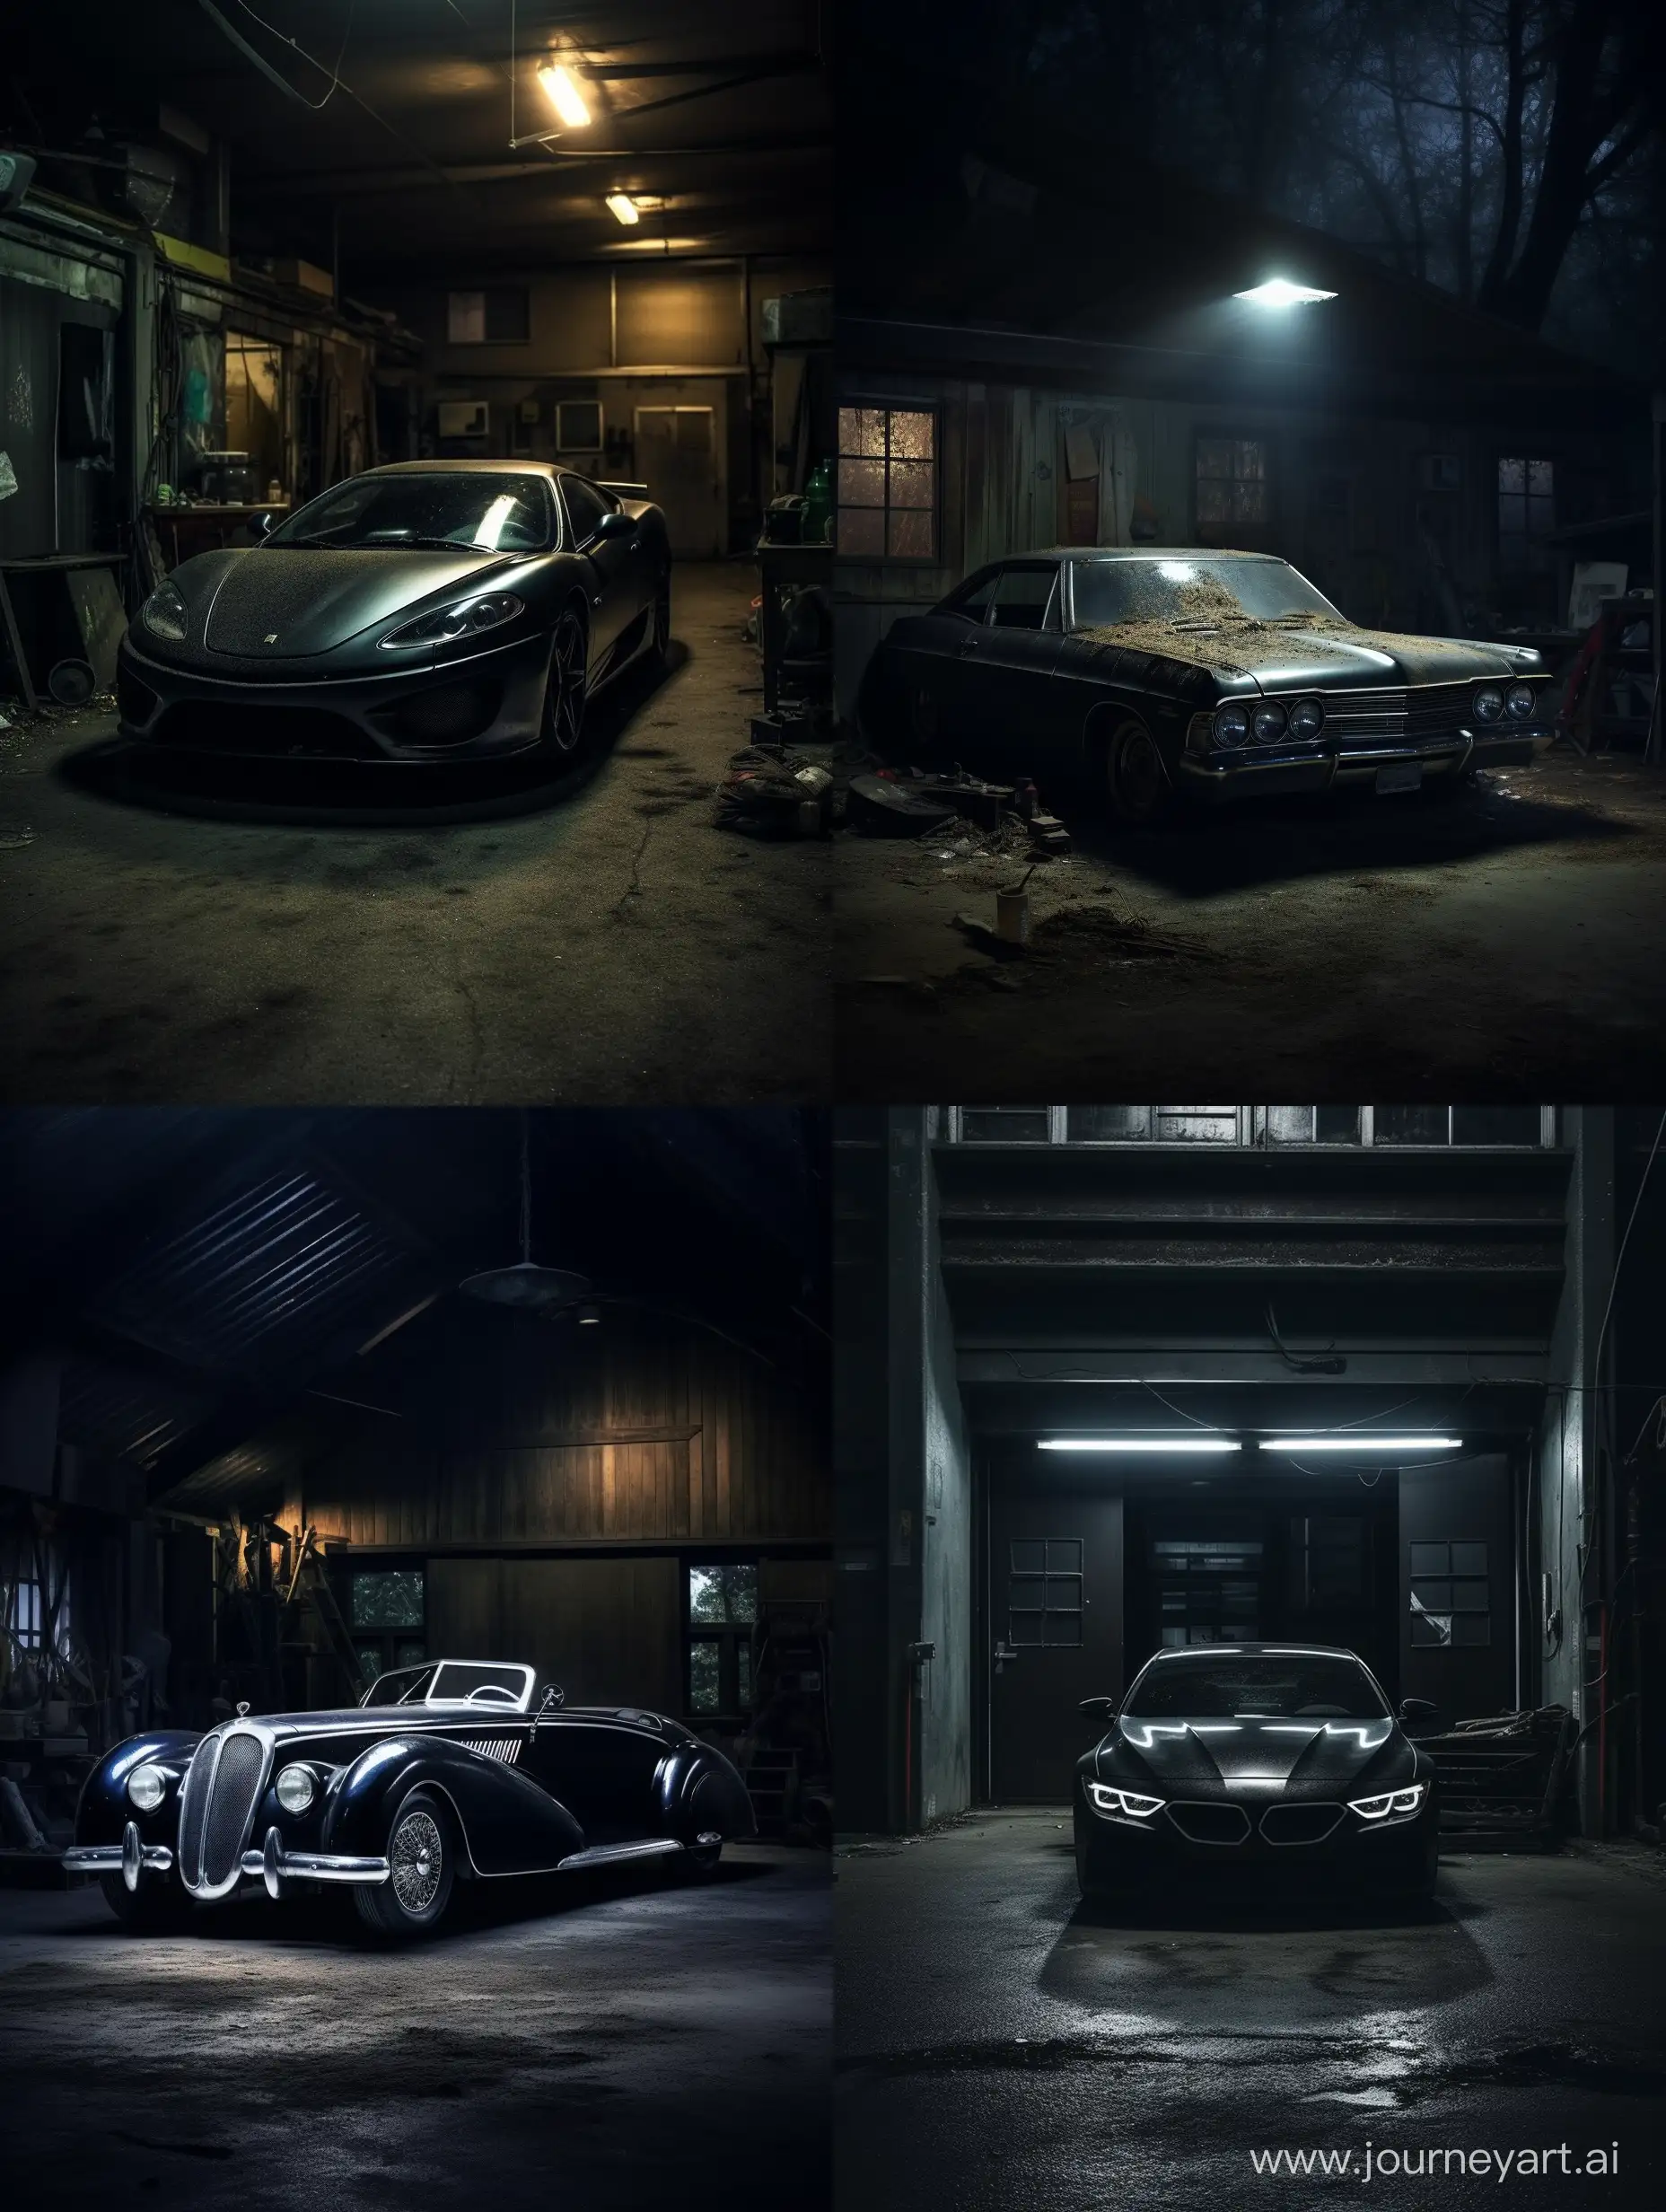 Dark-and-Beautiful-Car-in-Garage-Album-Cover-Photo